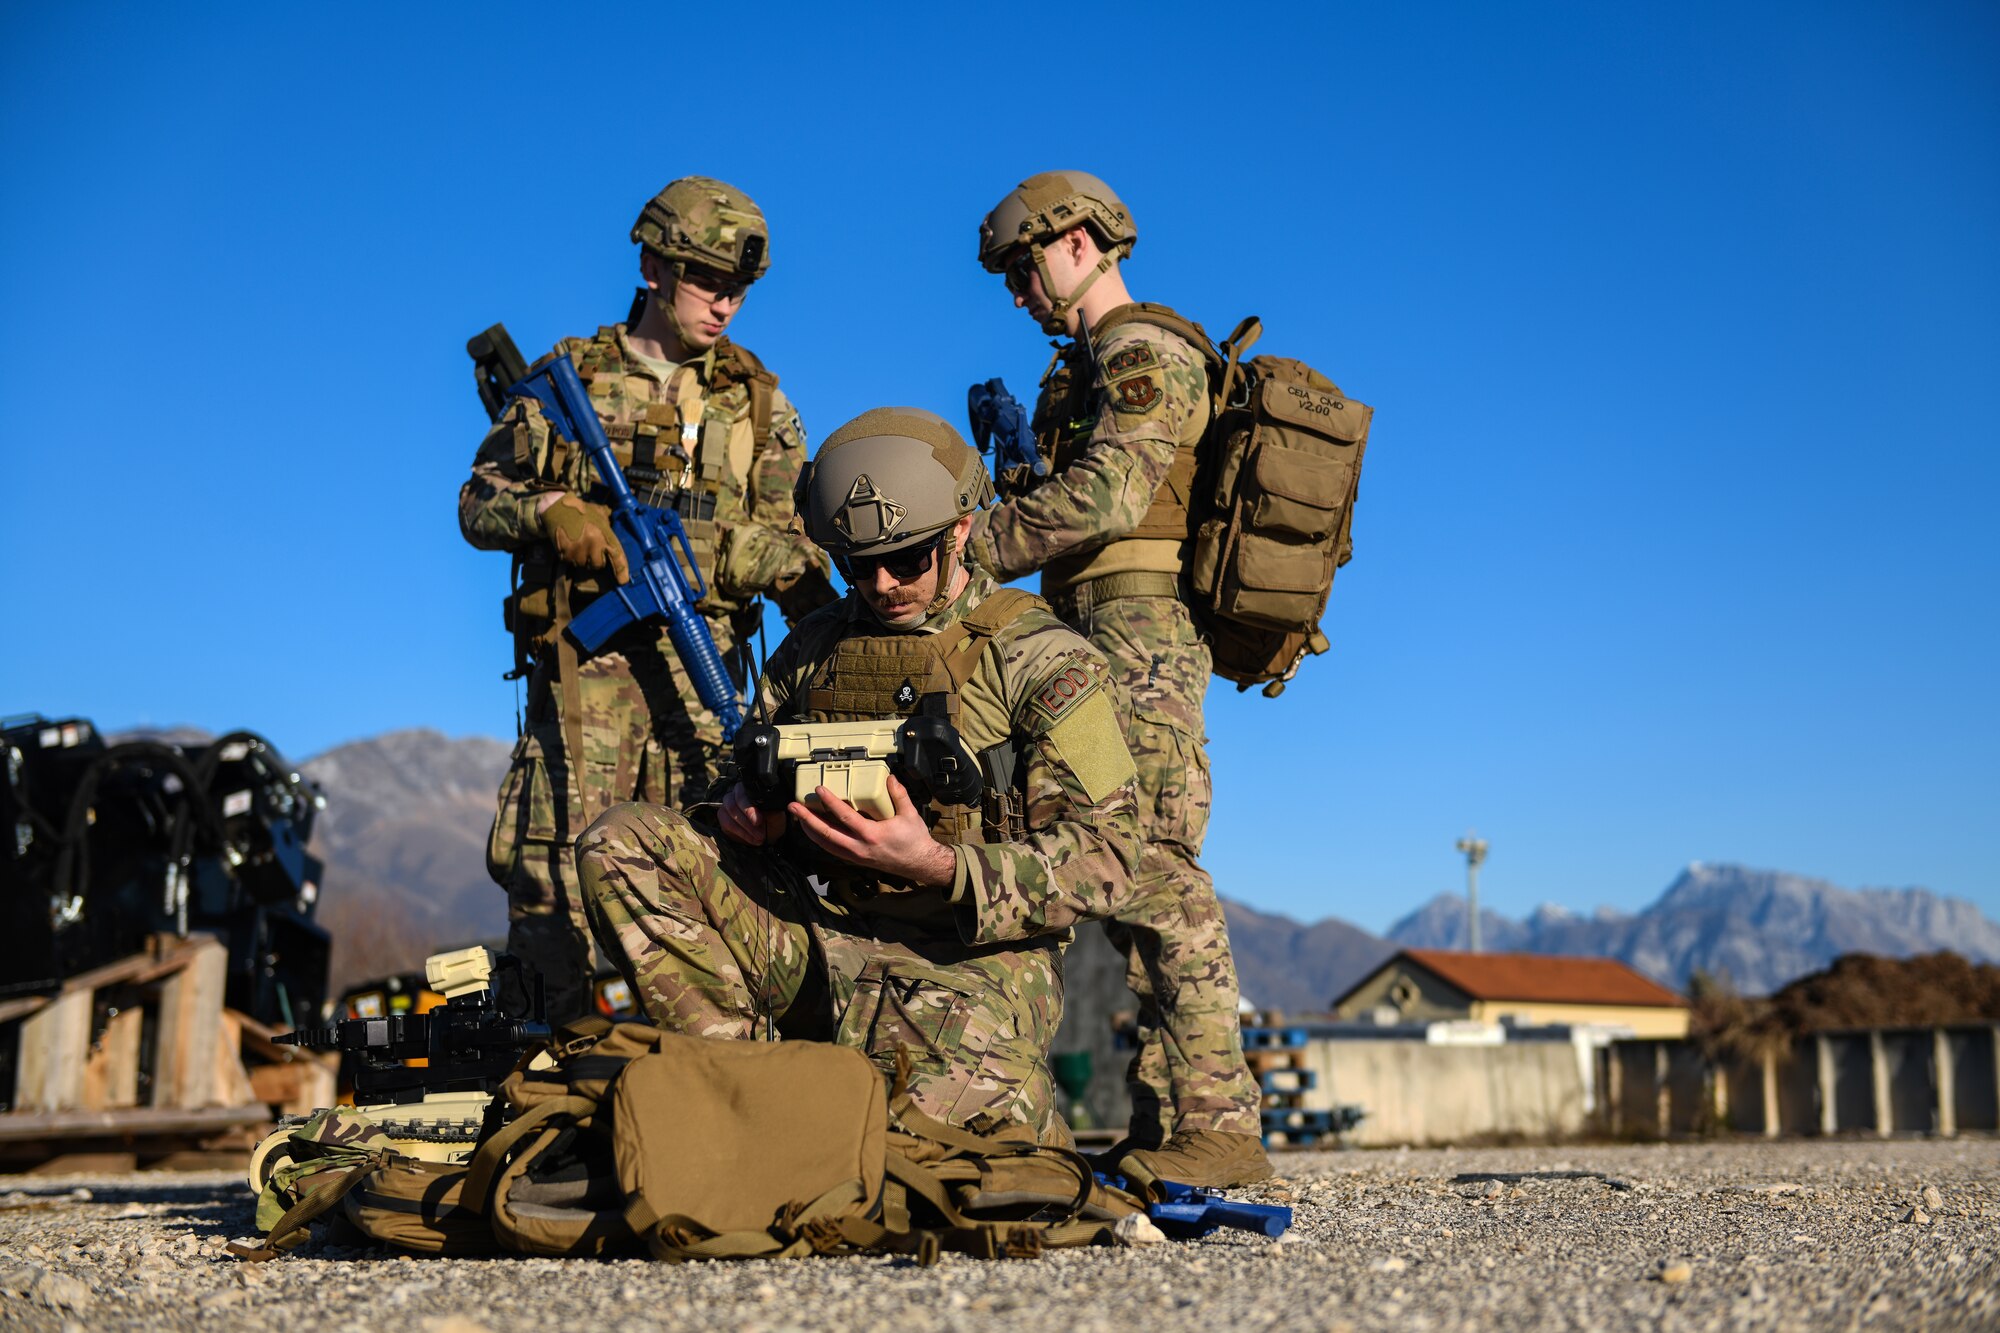 Explosive ordnance team members prepare equipment during a training exercise